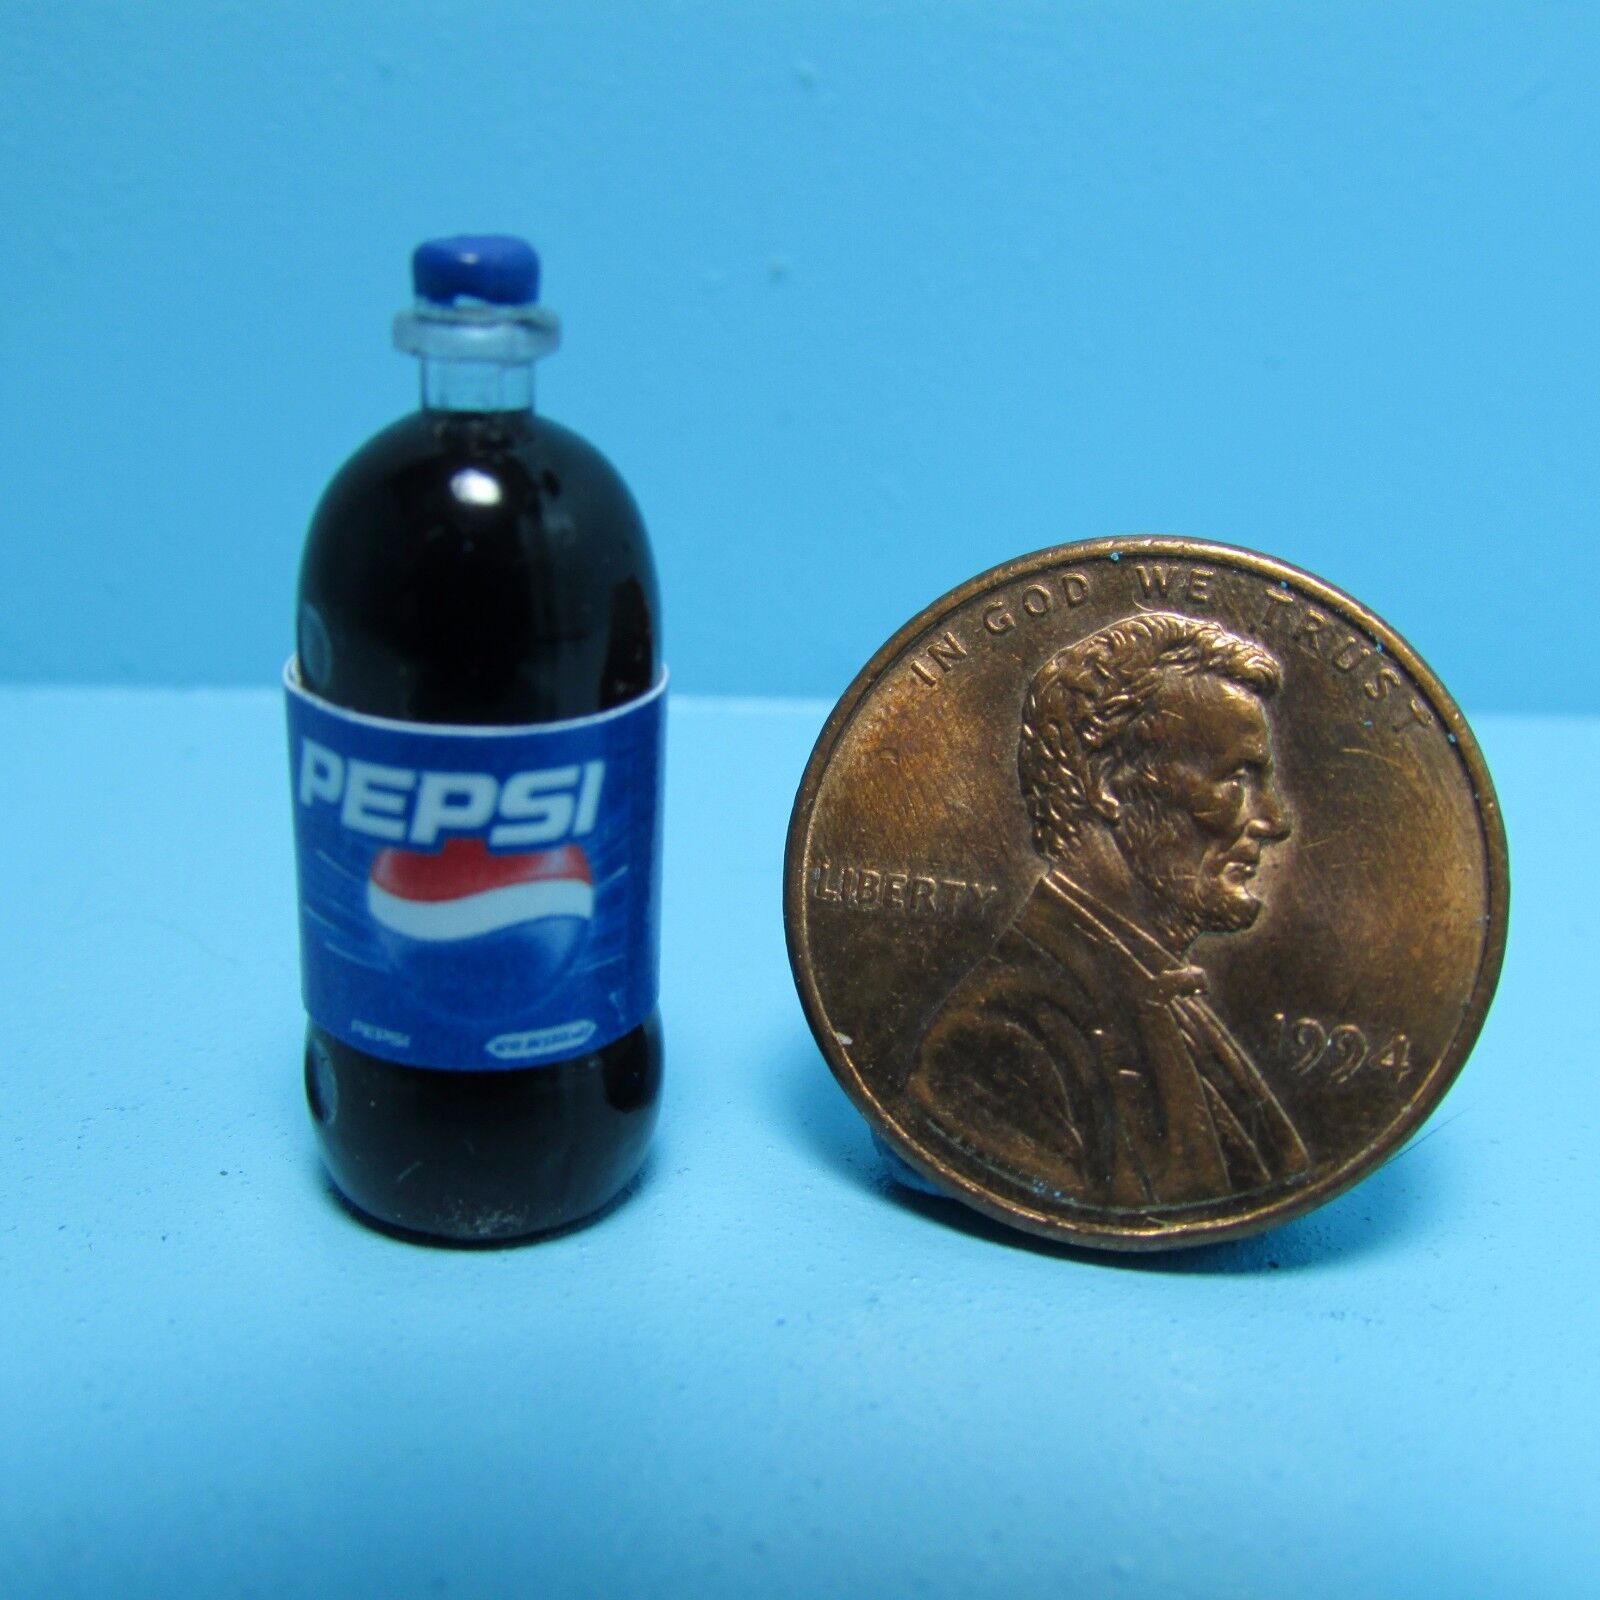 Dollhouse Miniature Detailed Replica 2 Litre Bottle of Pepsi G144